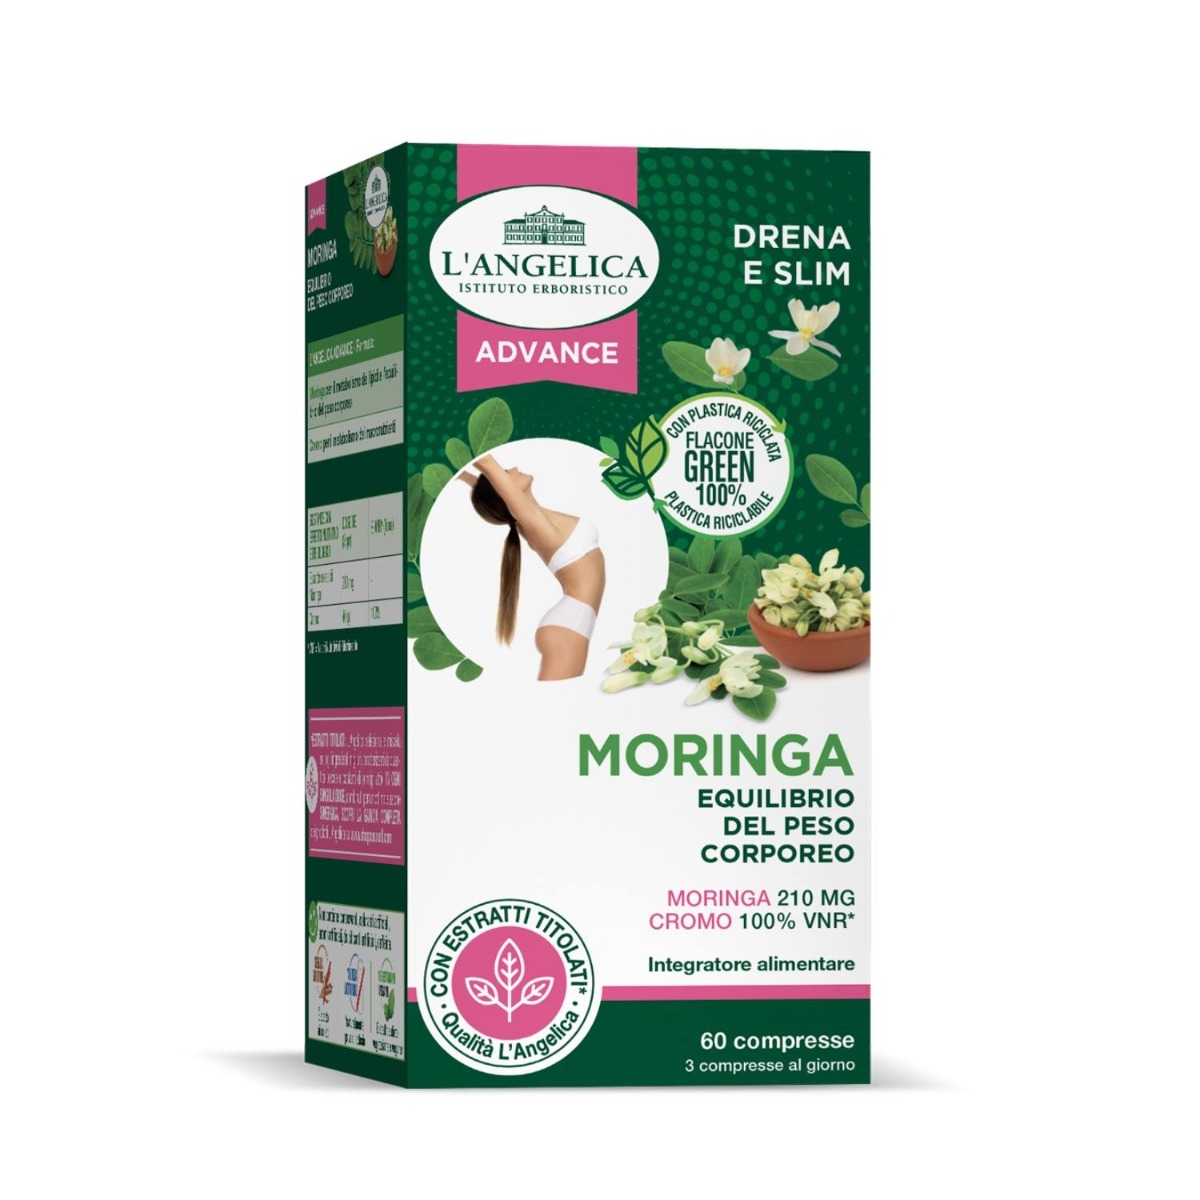 Moringa - Body Weight Balance Supplement